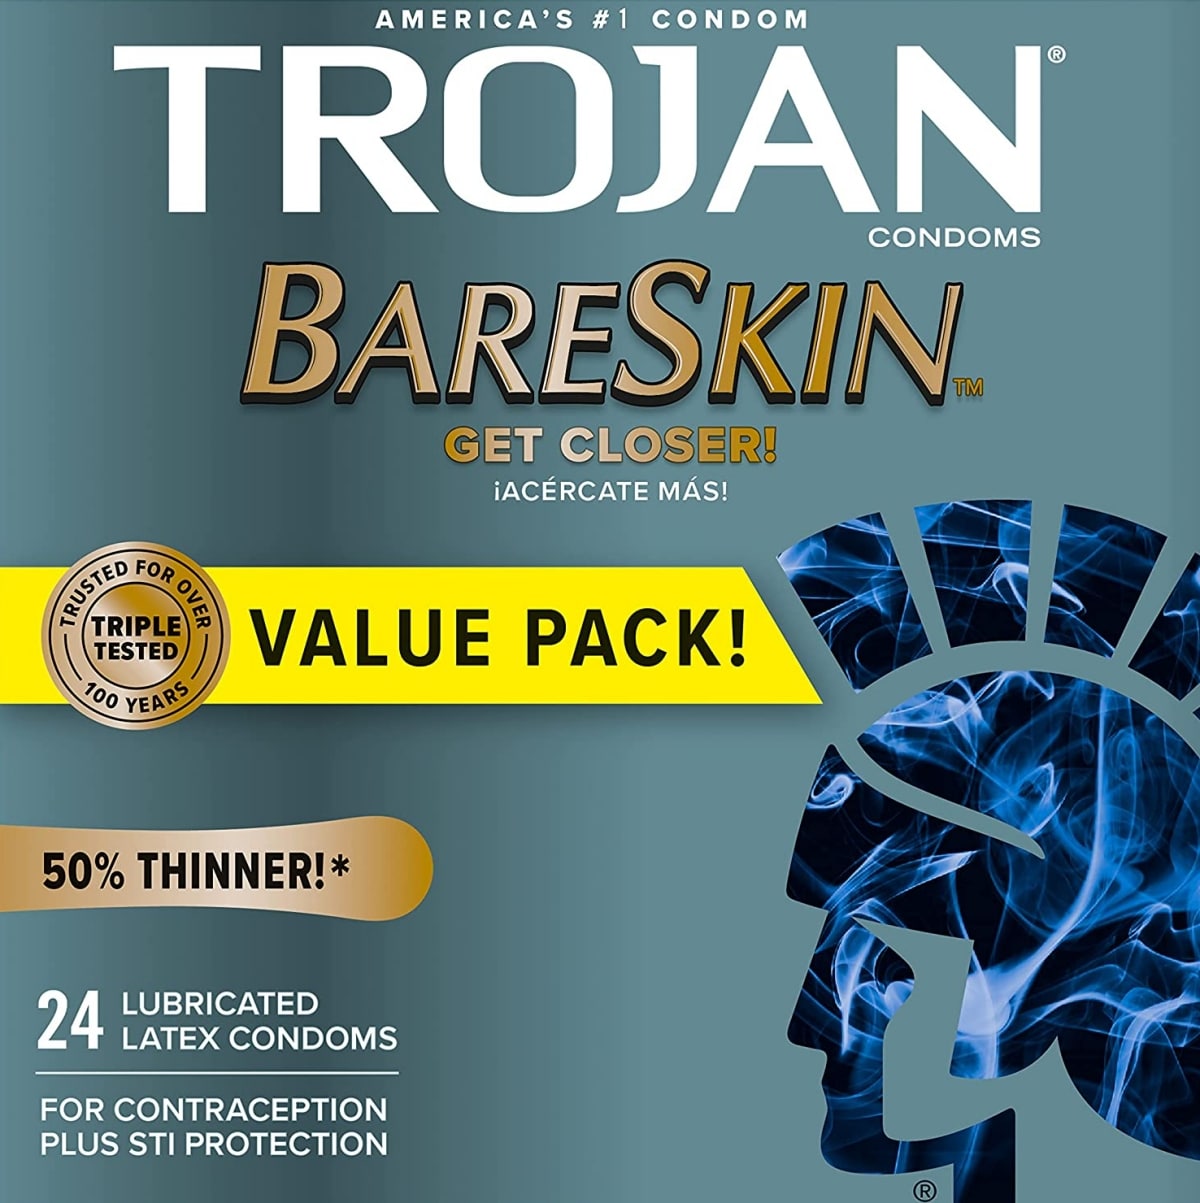 Trojan Bareskin condoms